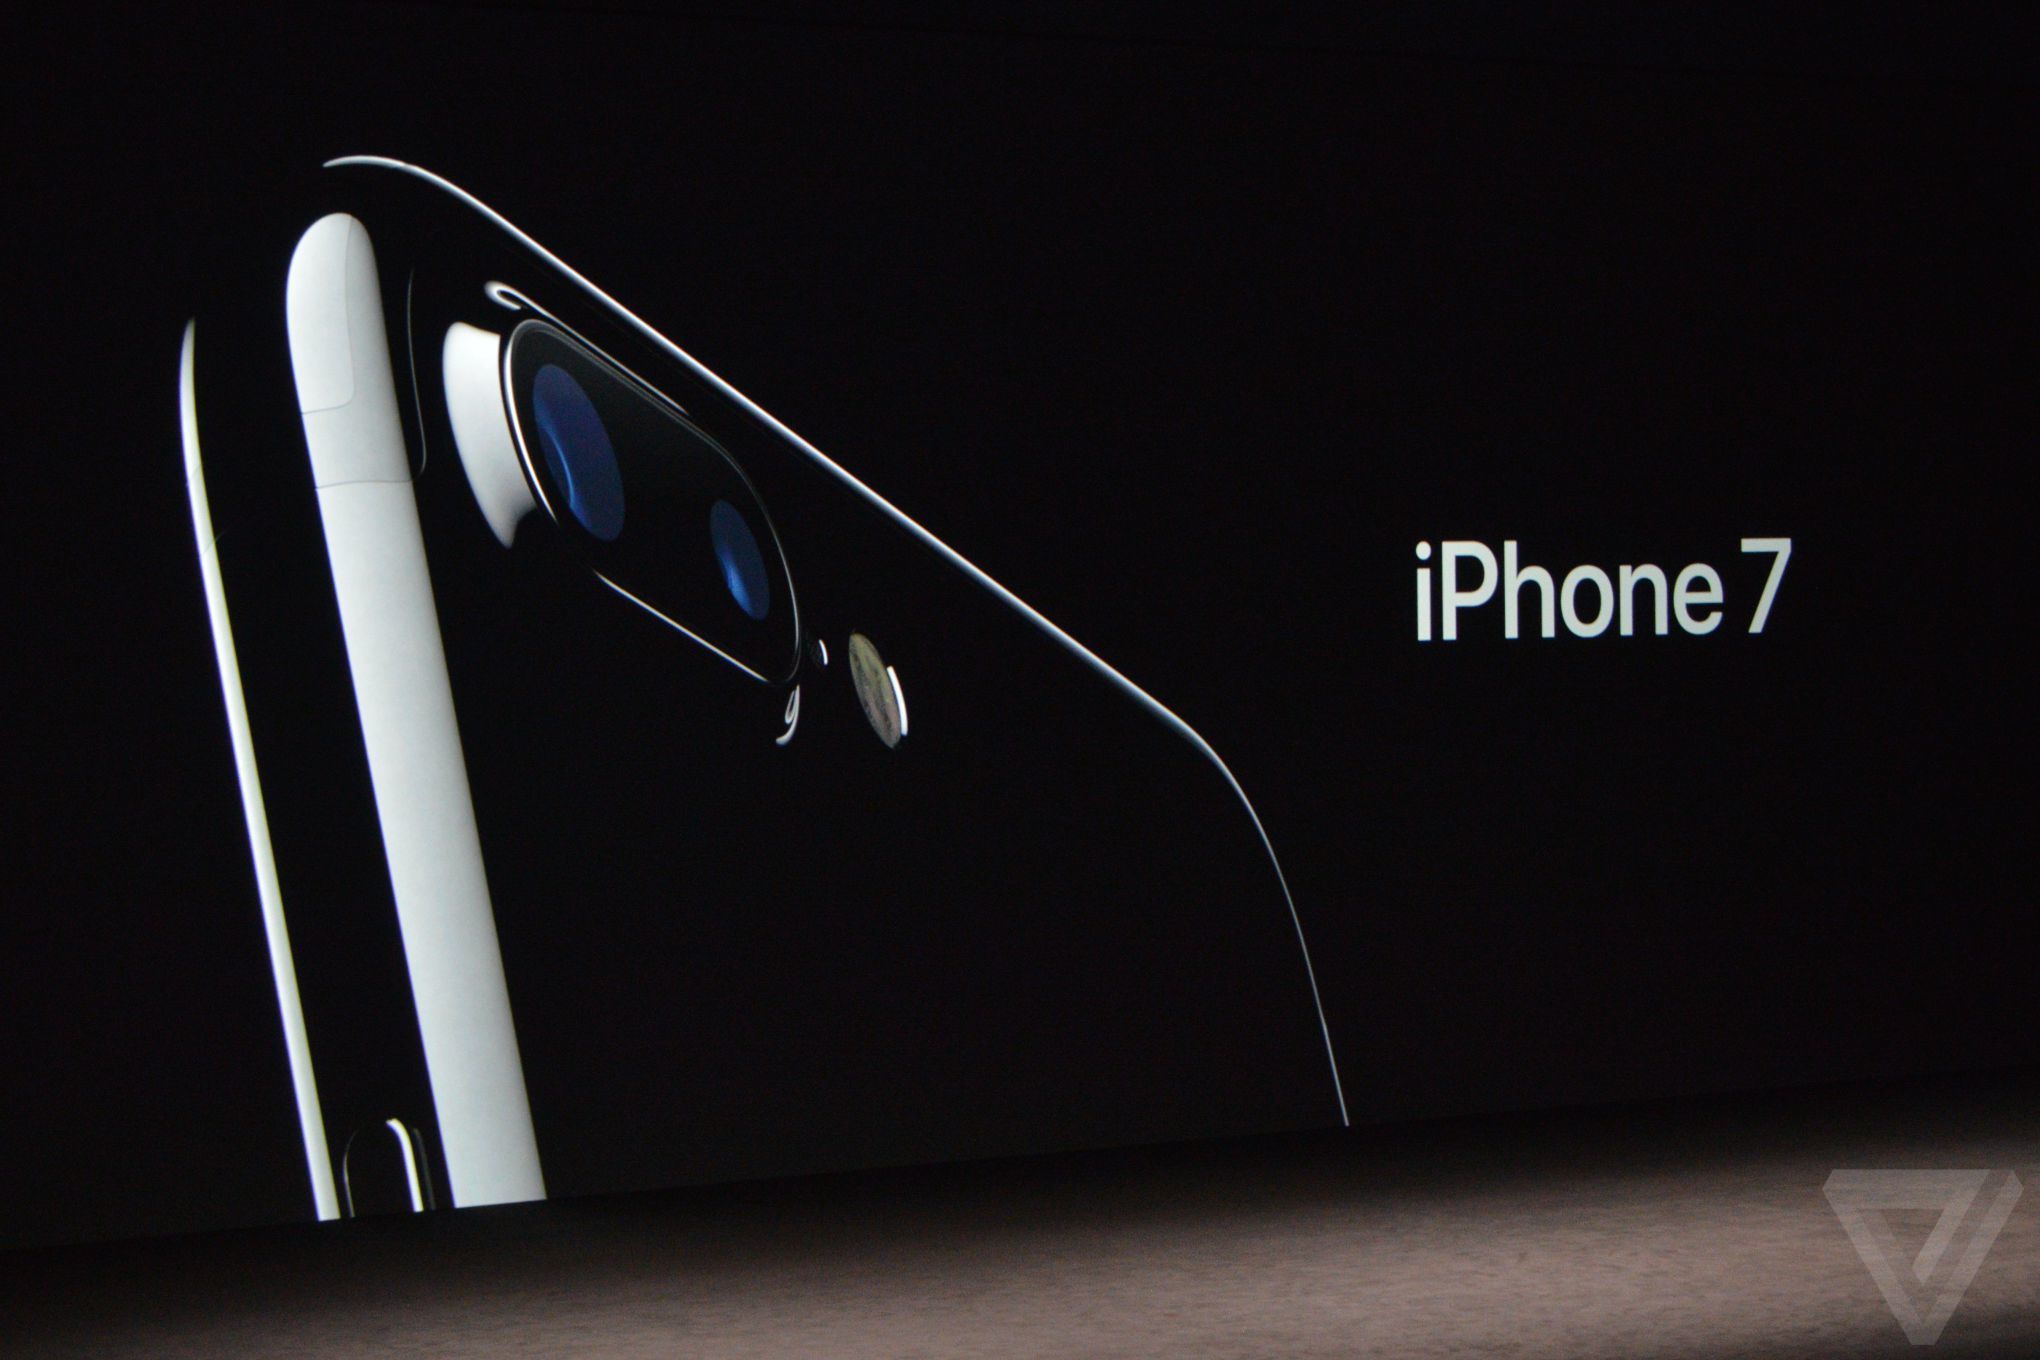 iPhone 7, iphone 7 plus, giá bán iphone 7, cấu hình iphone 7, camera iPhone 7